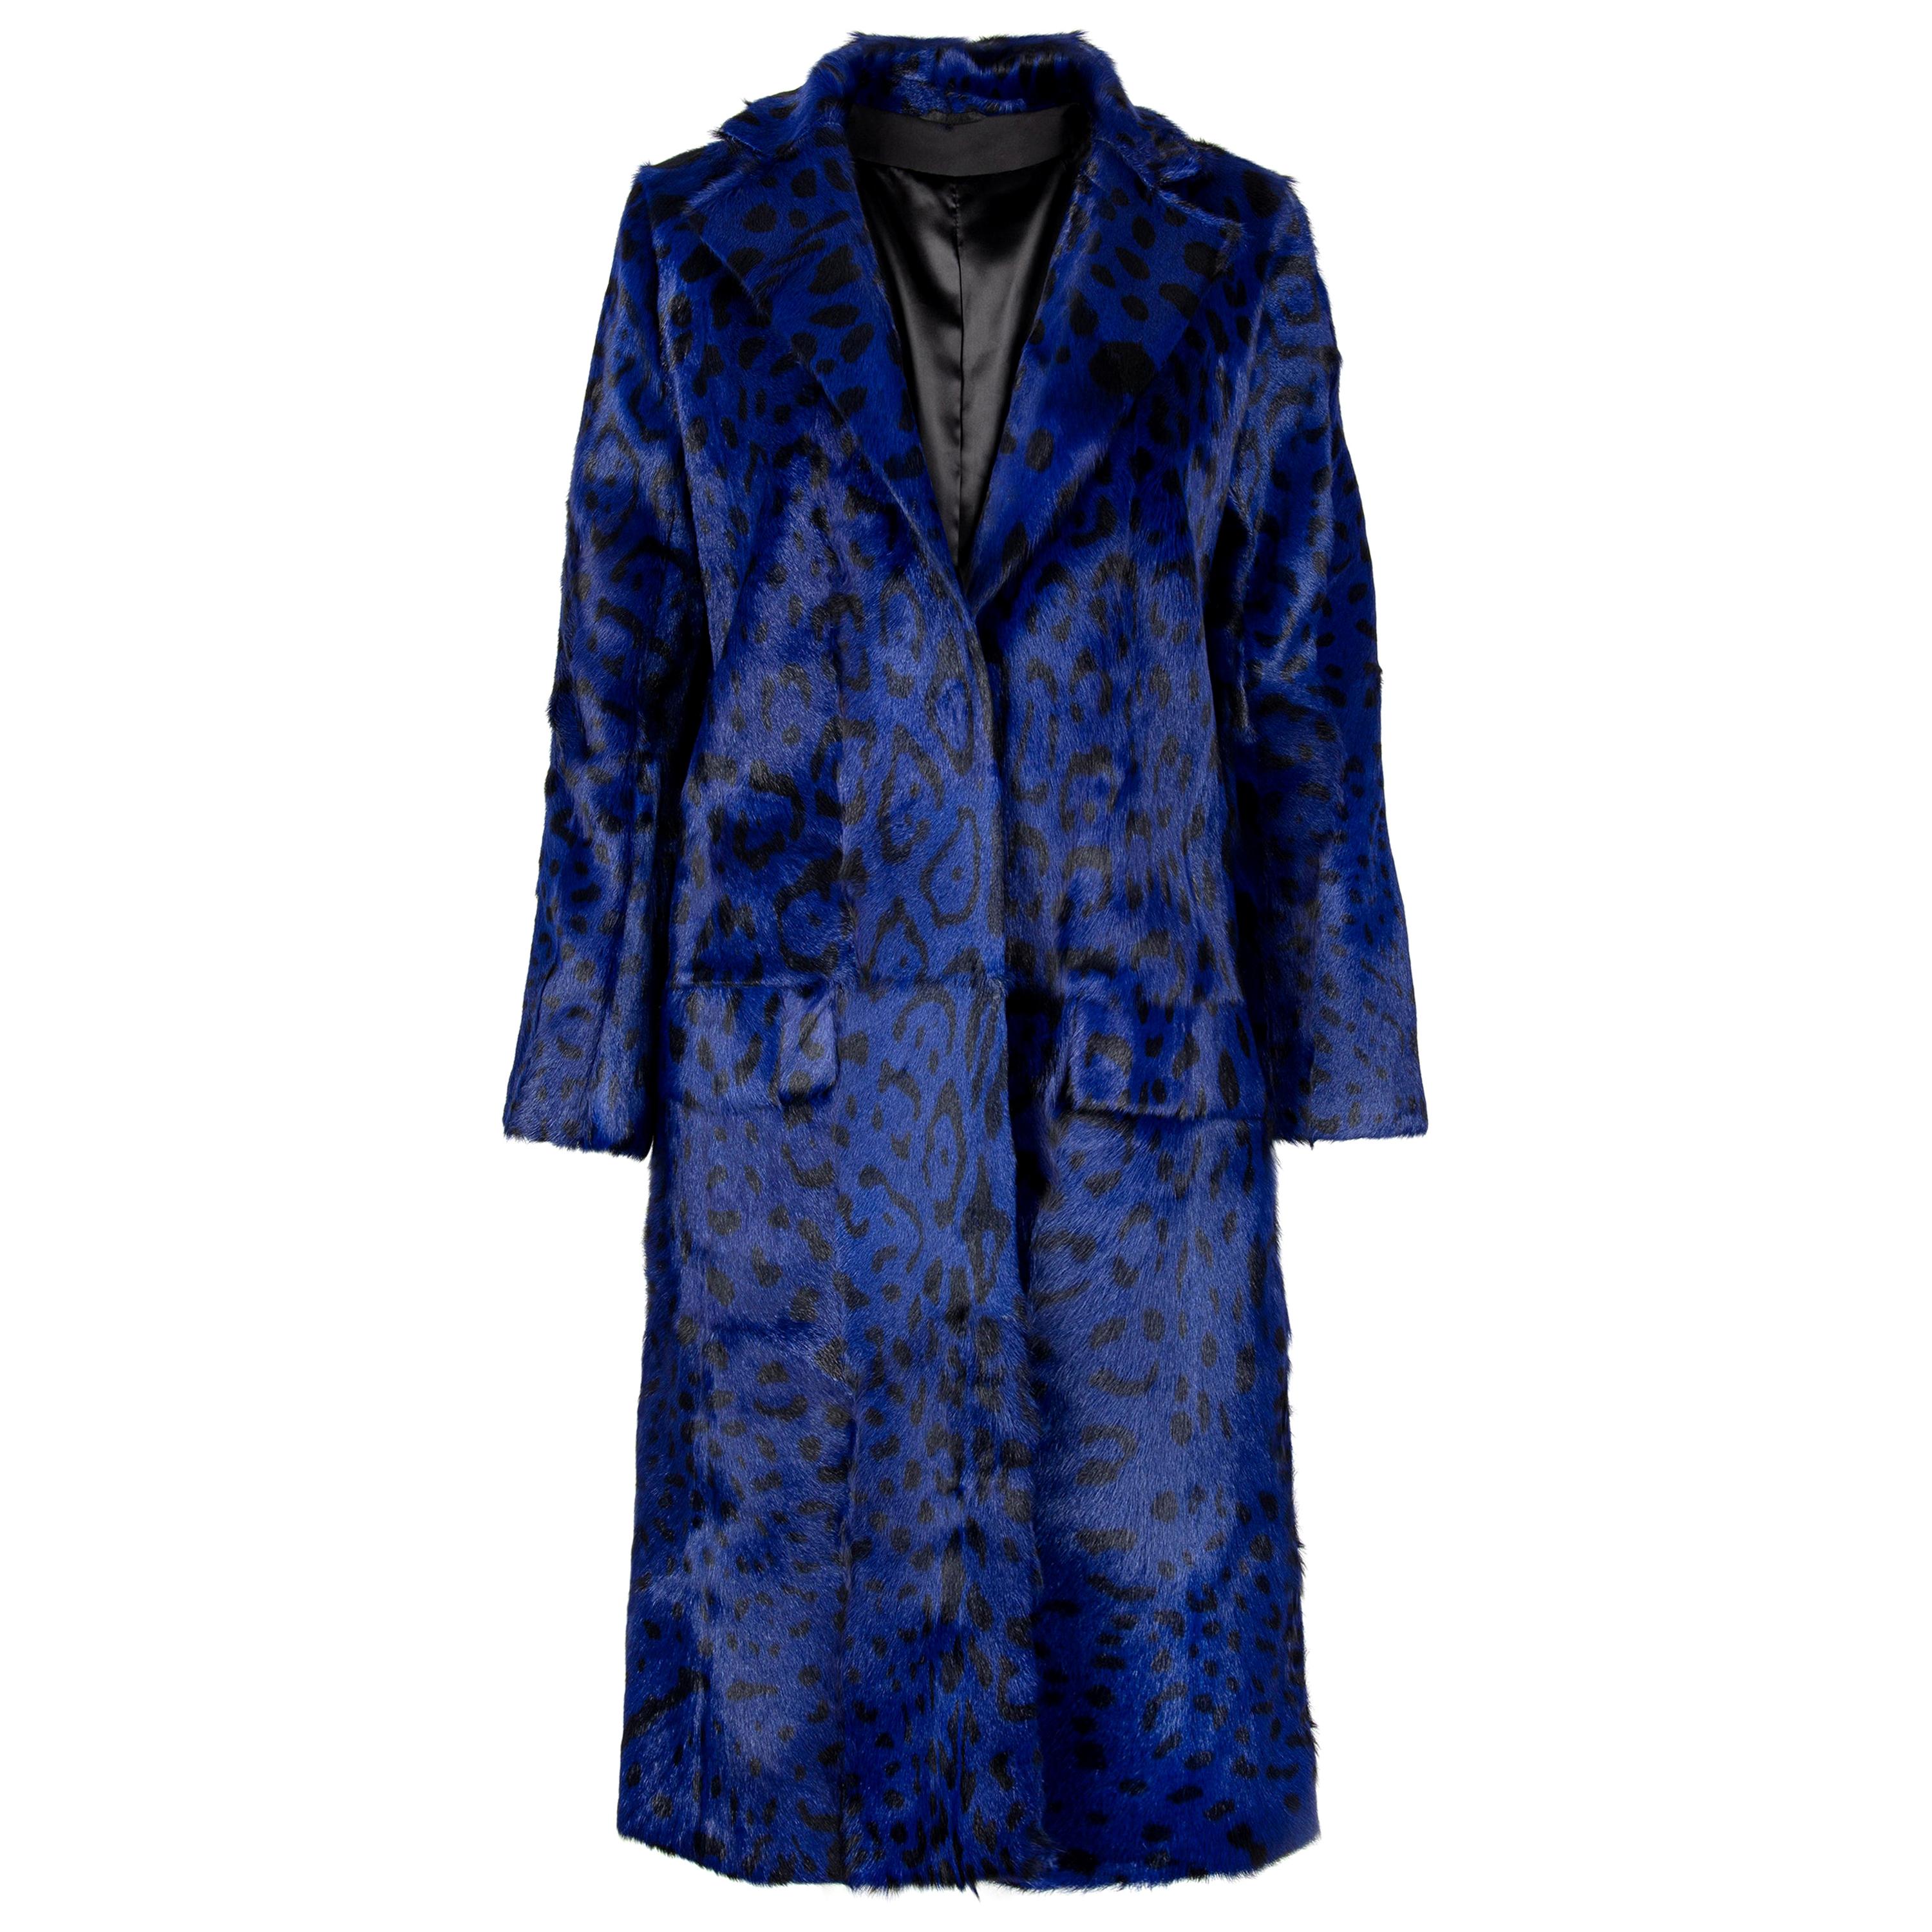 Verheyen London Ink Blue Leopard Print Coat in Goat Hair Fur UK 8 - Brand New  For Sale